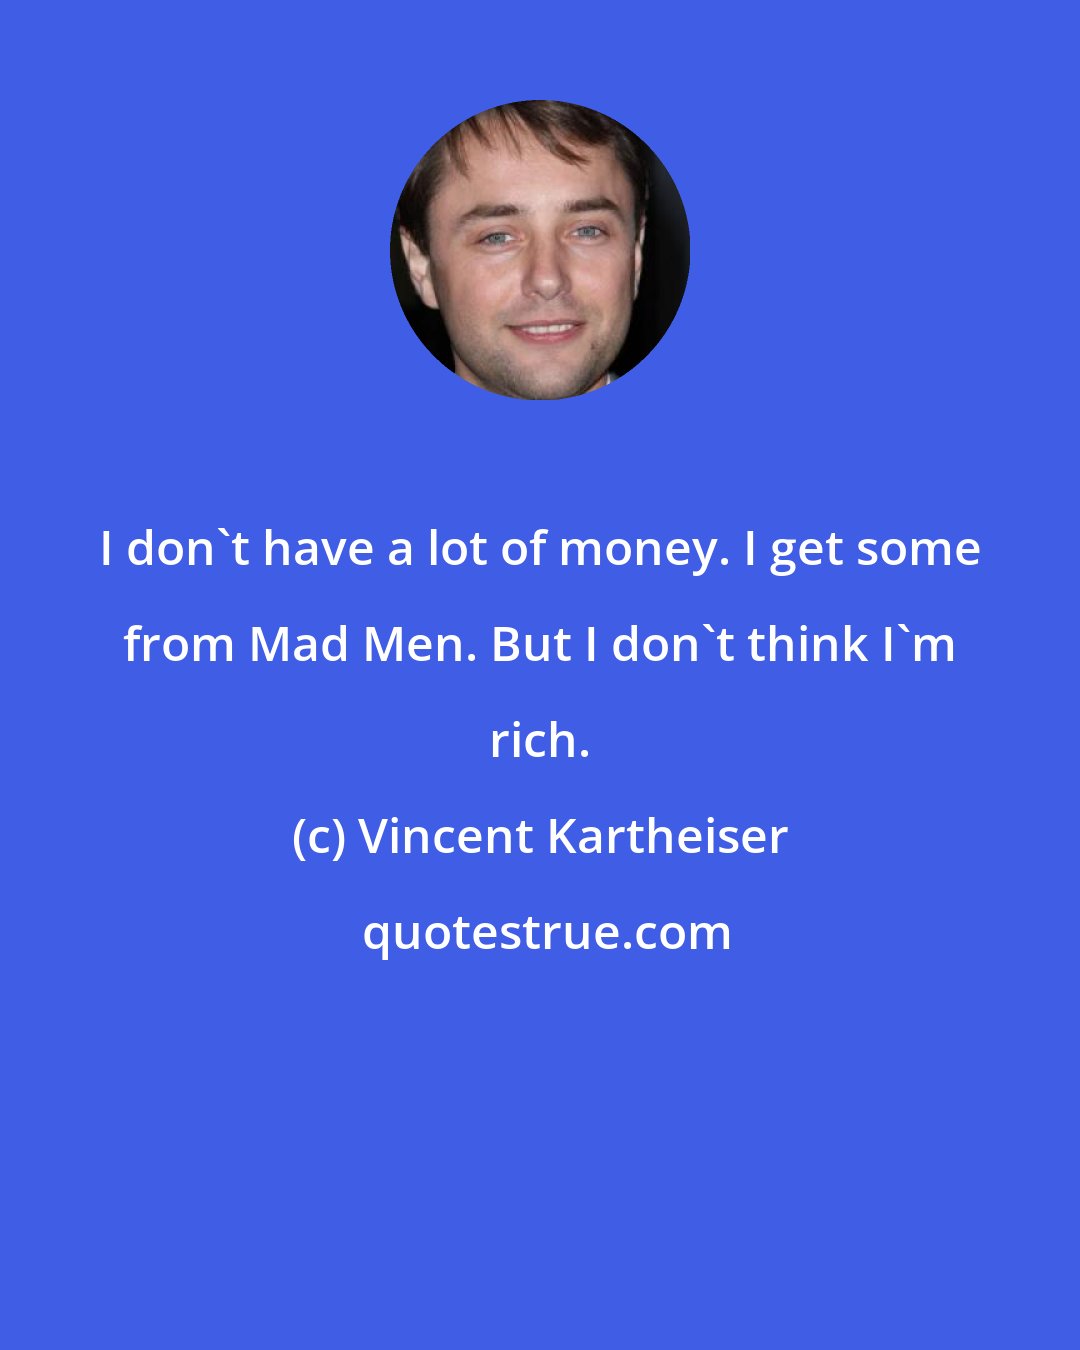 Vincent Kartheiser: I don't have a lot of money. I get some from Mad Men. But I don't think I'm rich.